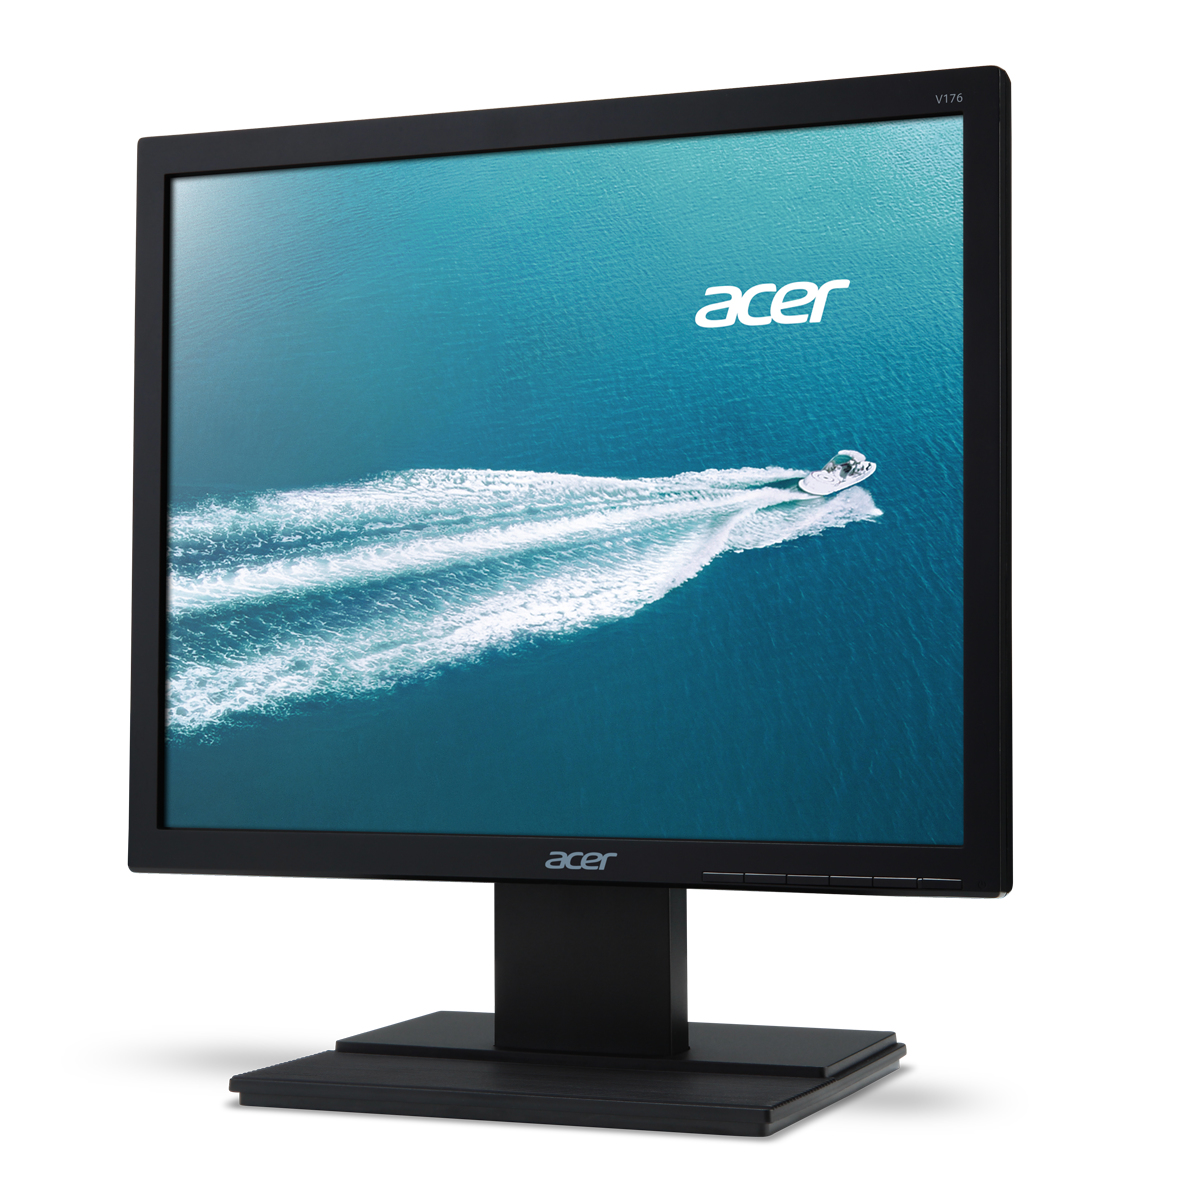 Acer Essential 176L bd 17" 1280 x 1024 pixels Black